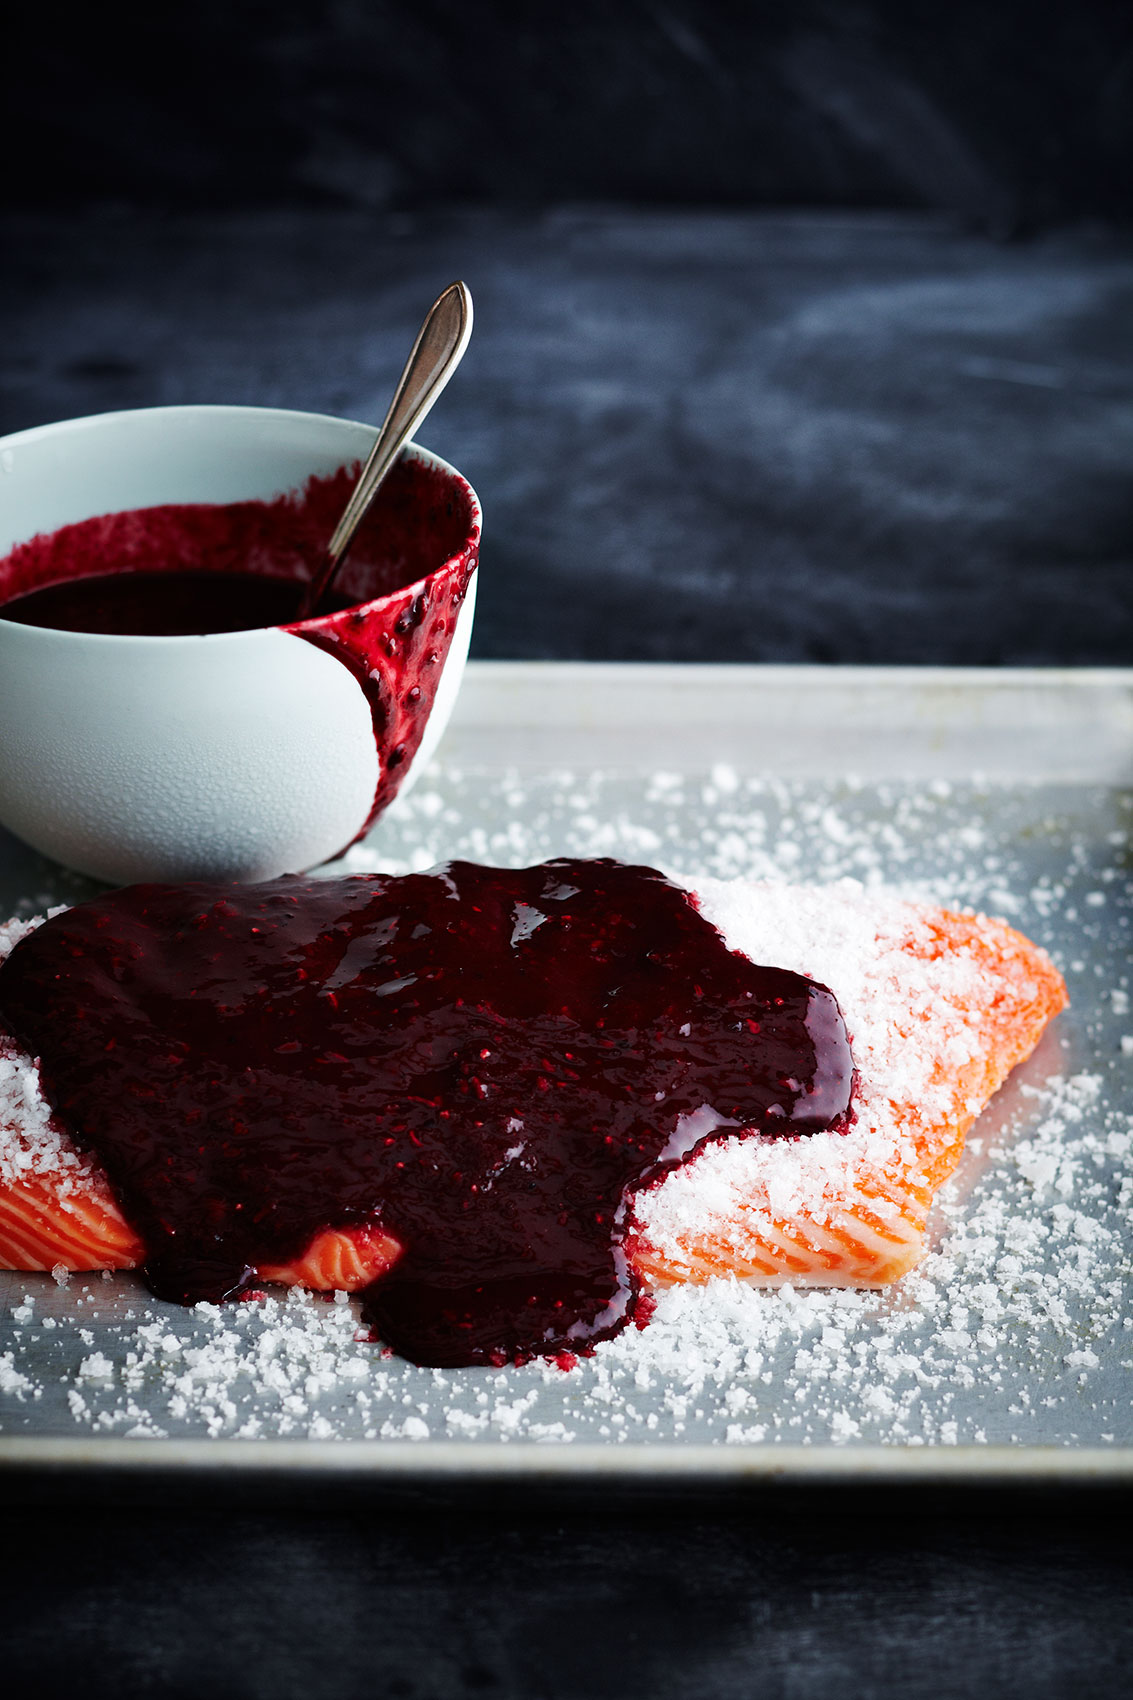 Laesoe Salt • Boysenberry Sauce Coating Salt Gravlax • Advertising & Lifestyle Food Photography